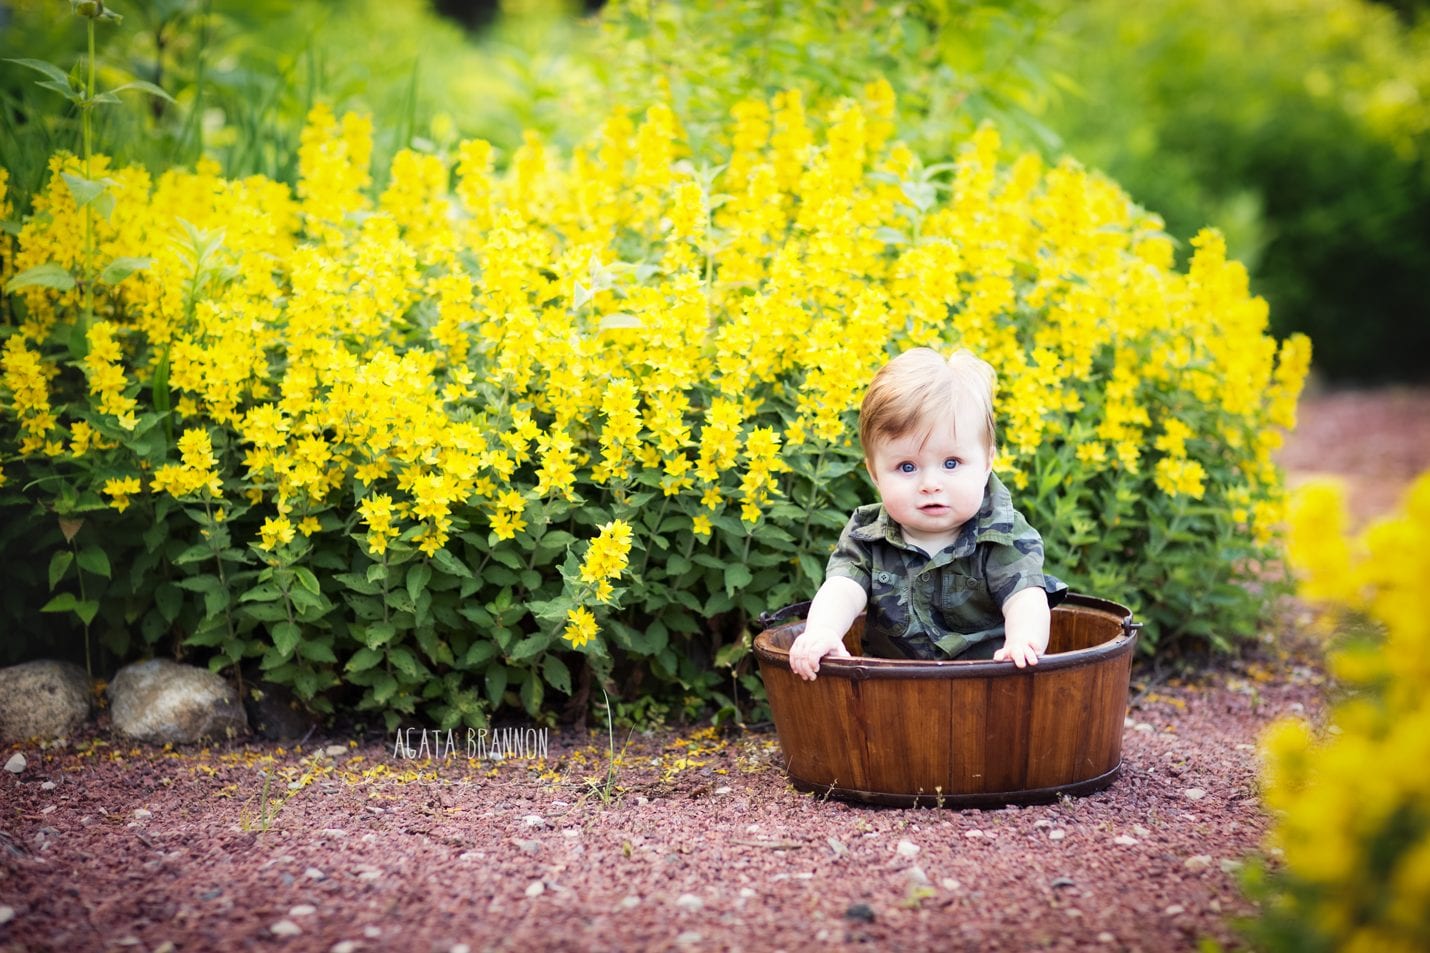 Palatine Baby Photographer | Agata Brannon Photography